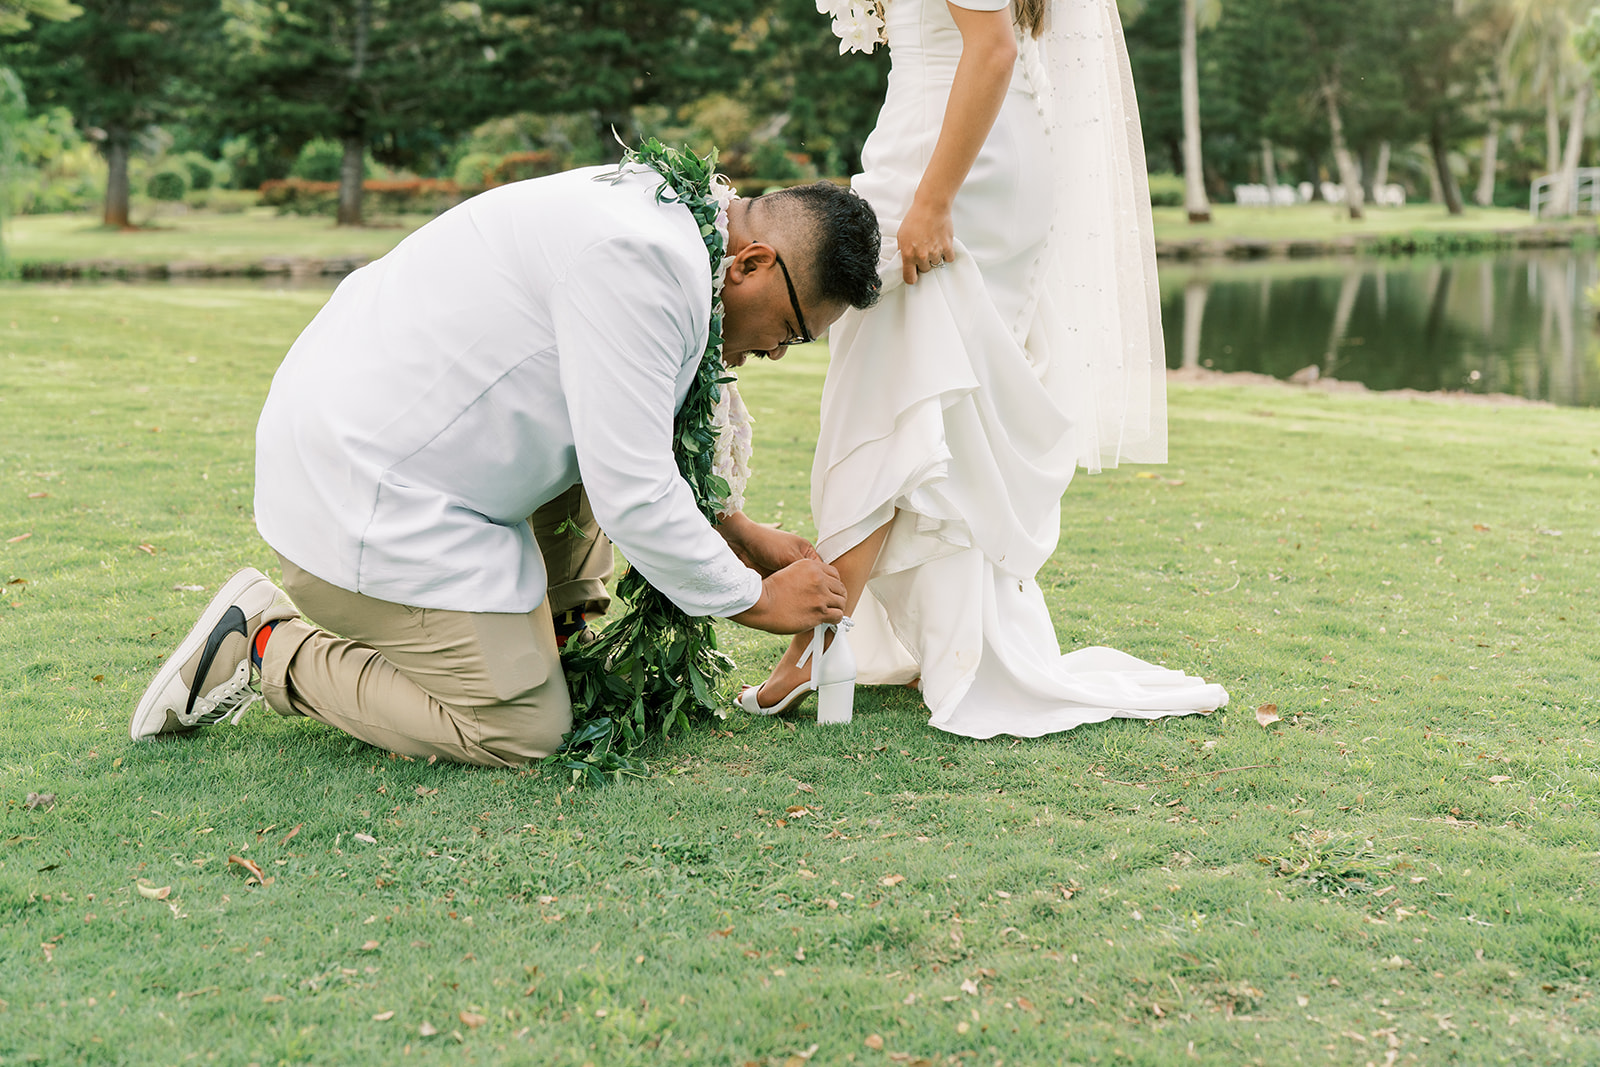 A groom adjusting the hem of a bride's dress outdoors.